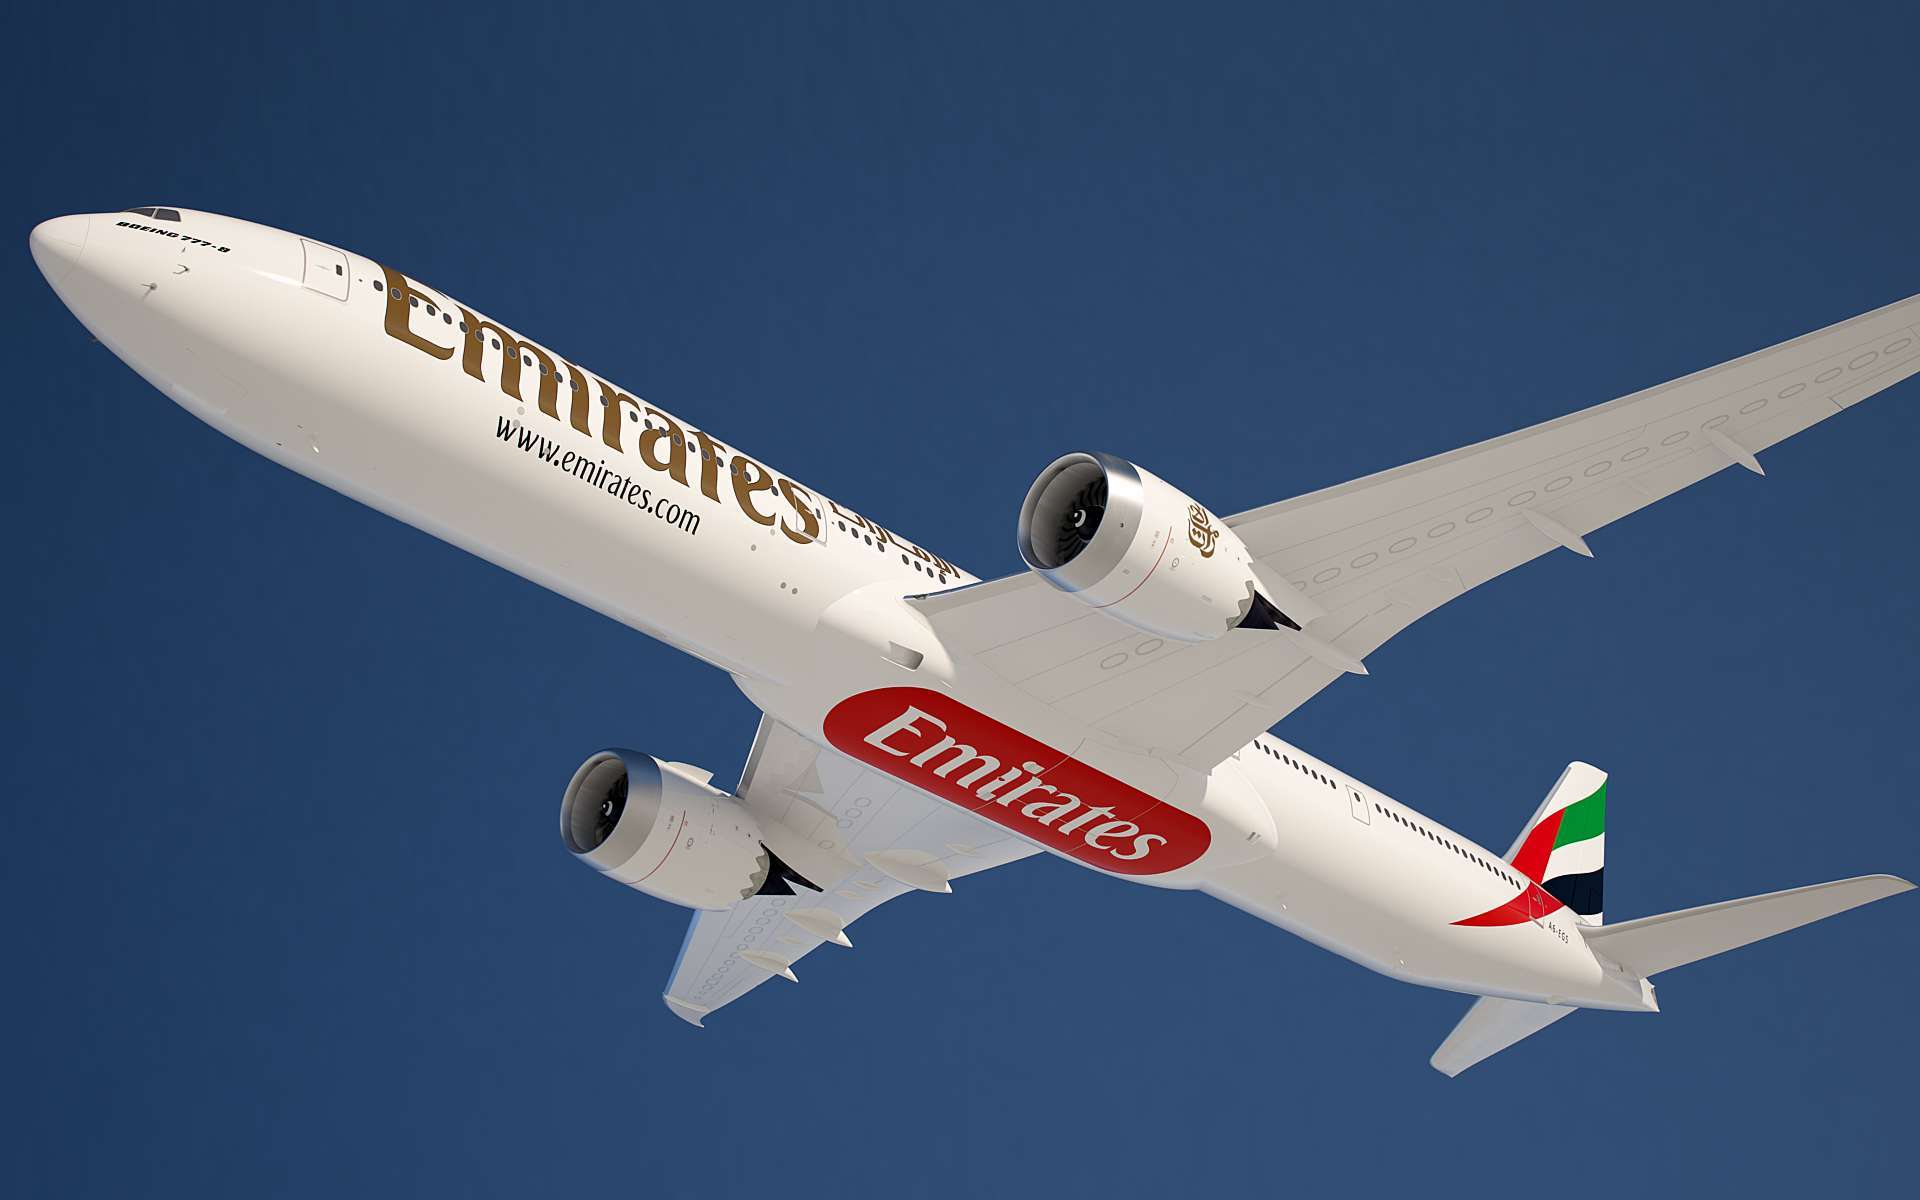 Dubai Air Show: Emirates Orders 202 GE9X Engines